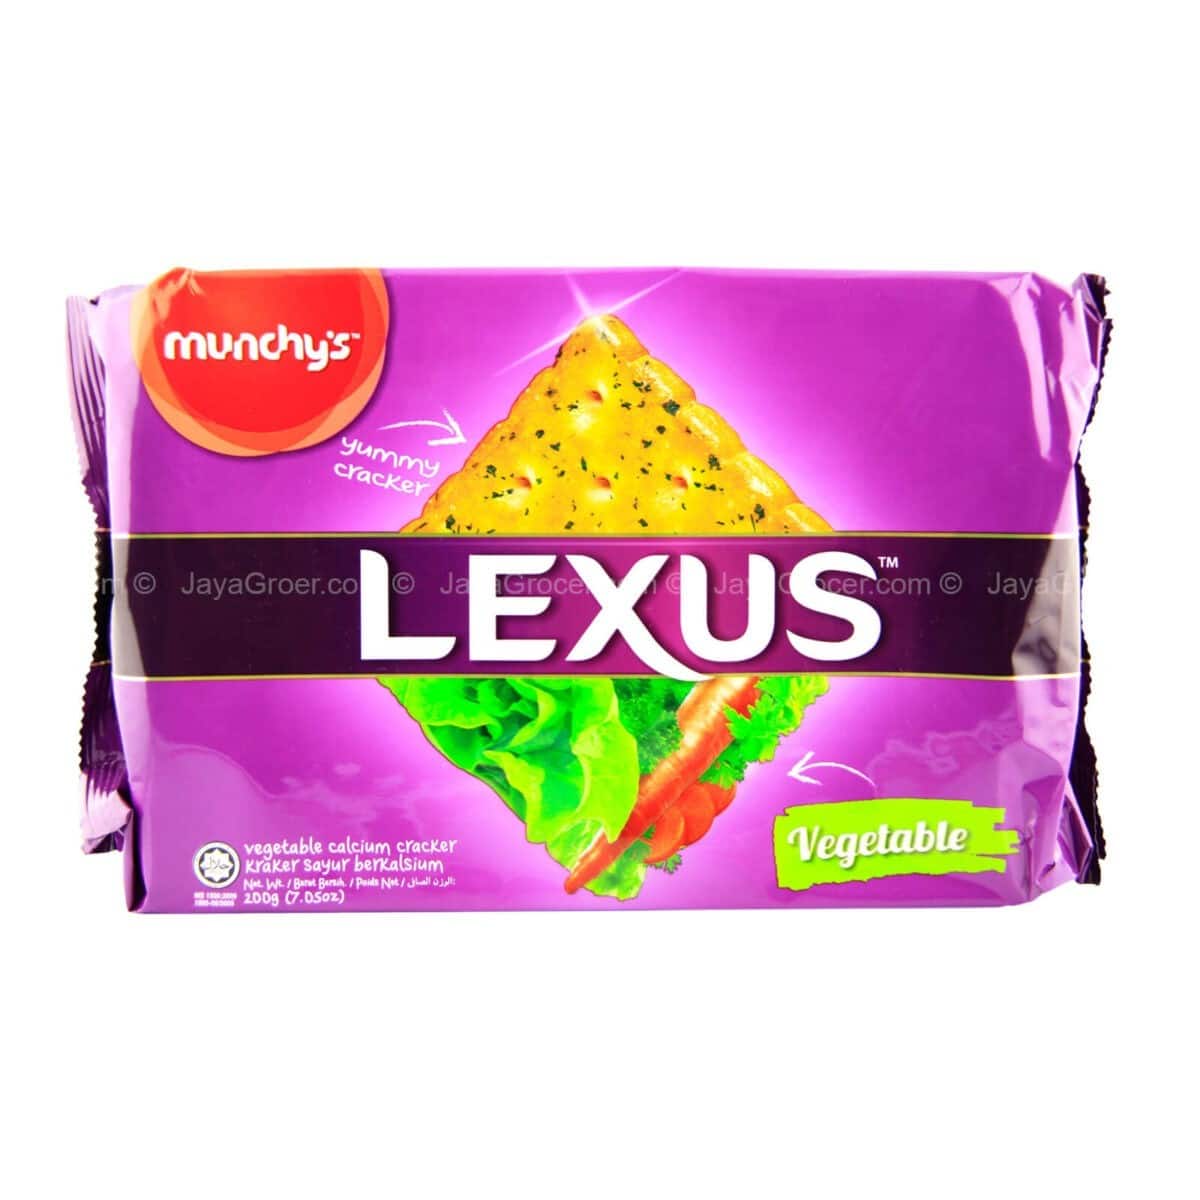 Munchy’s Lexus vegetable cracker